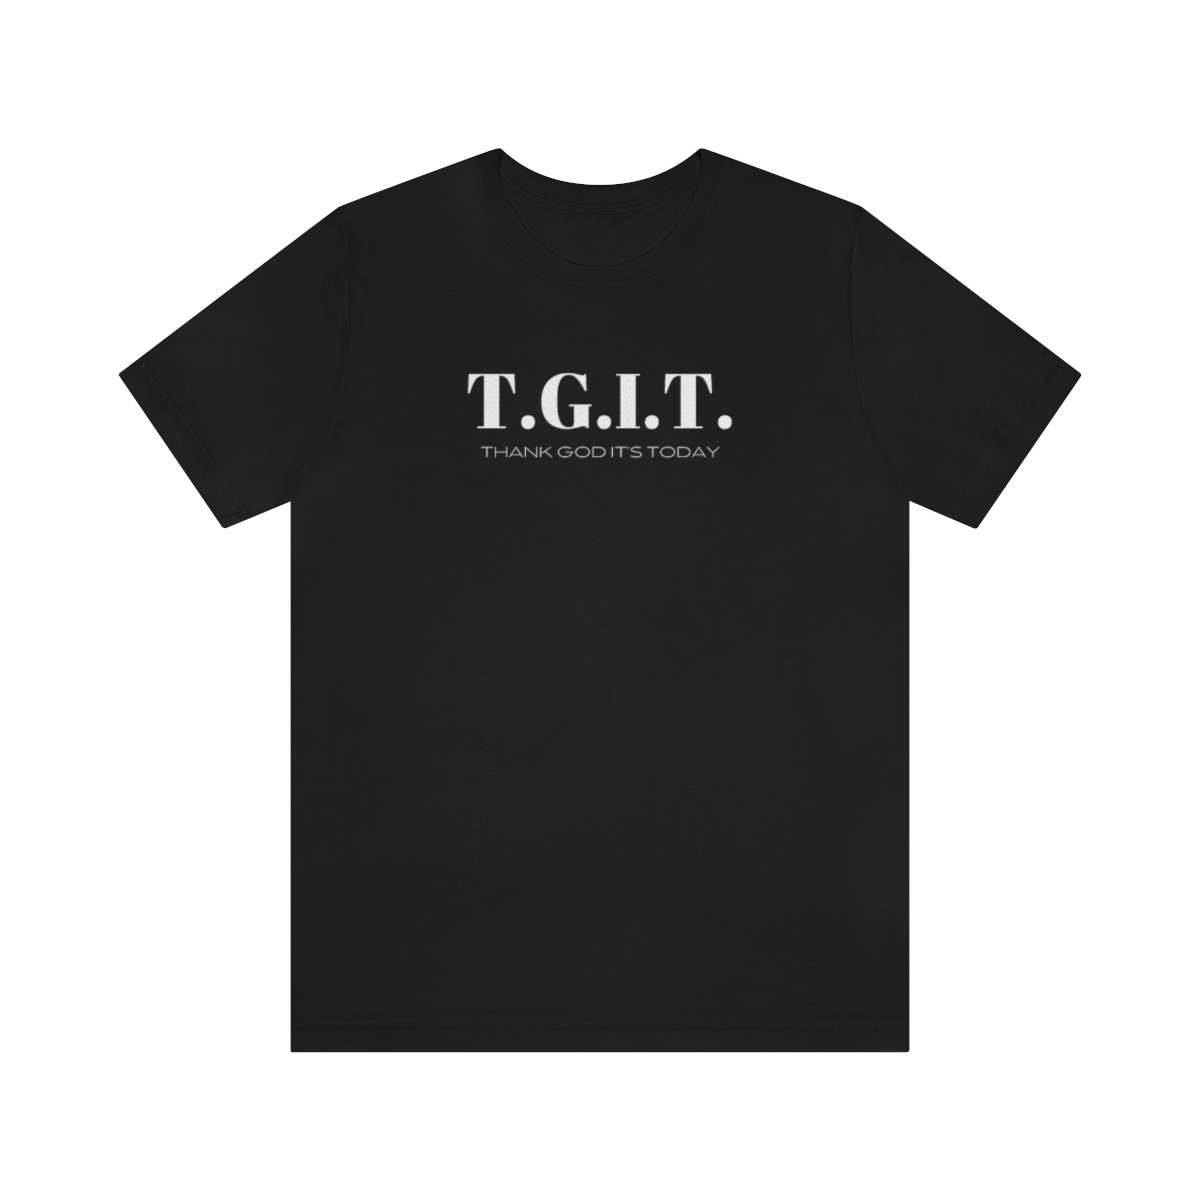 T.G.I.T. shirt